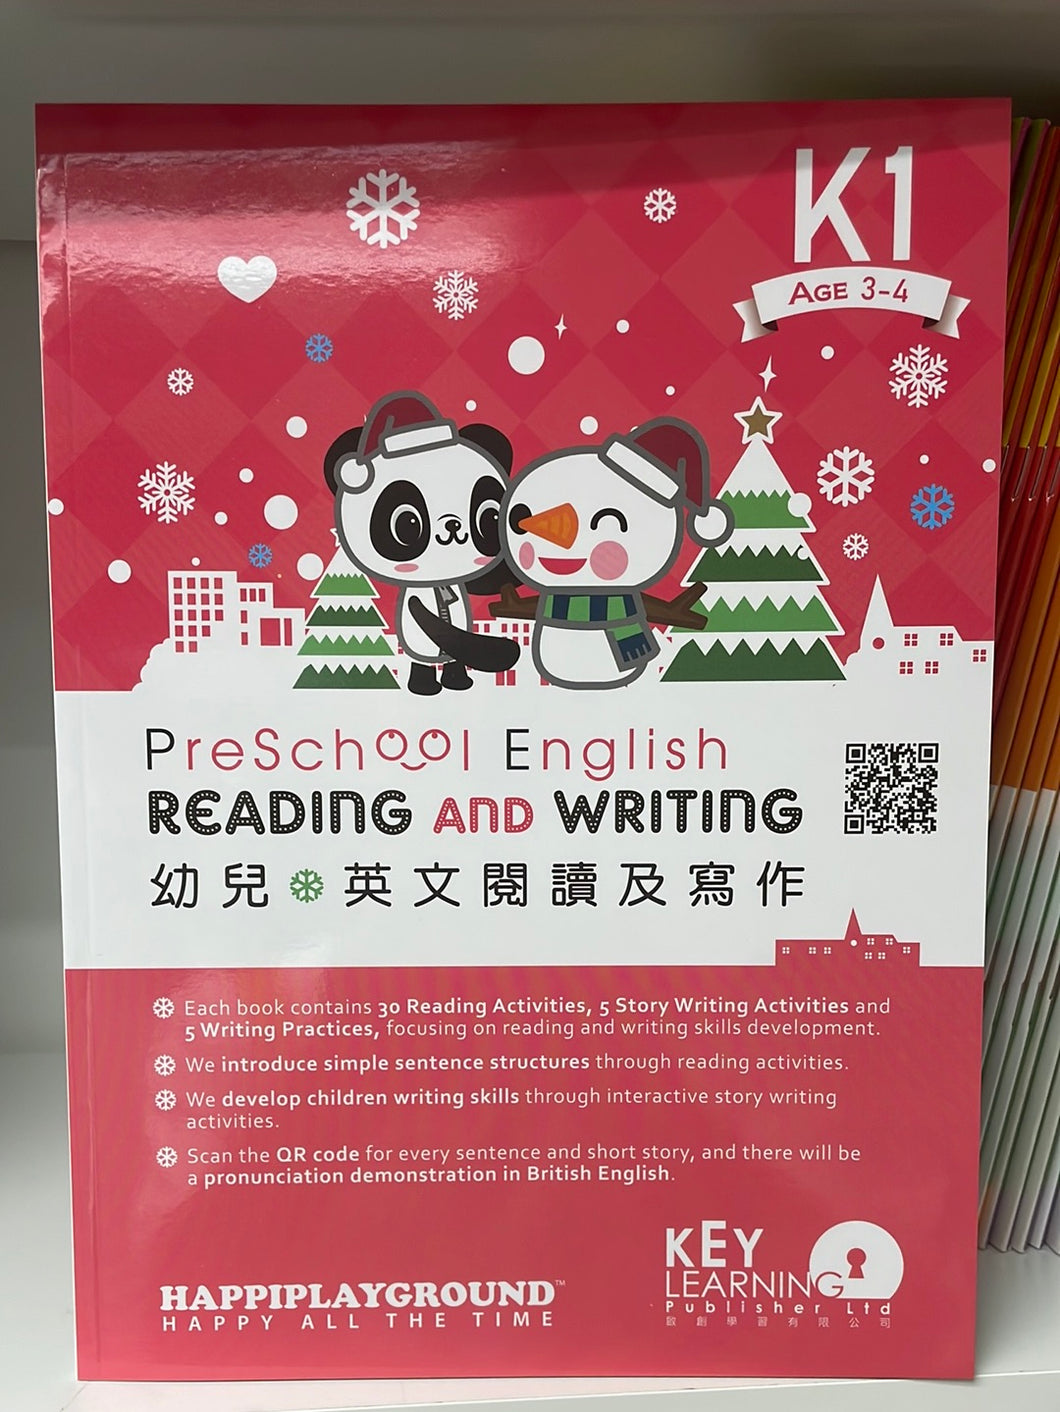 KL Preschool English Reading and Writing K1